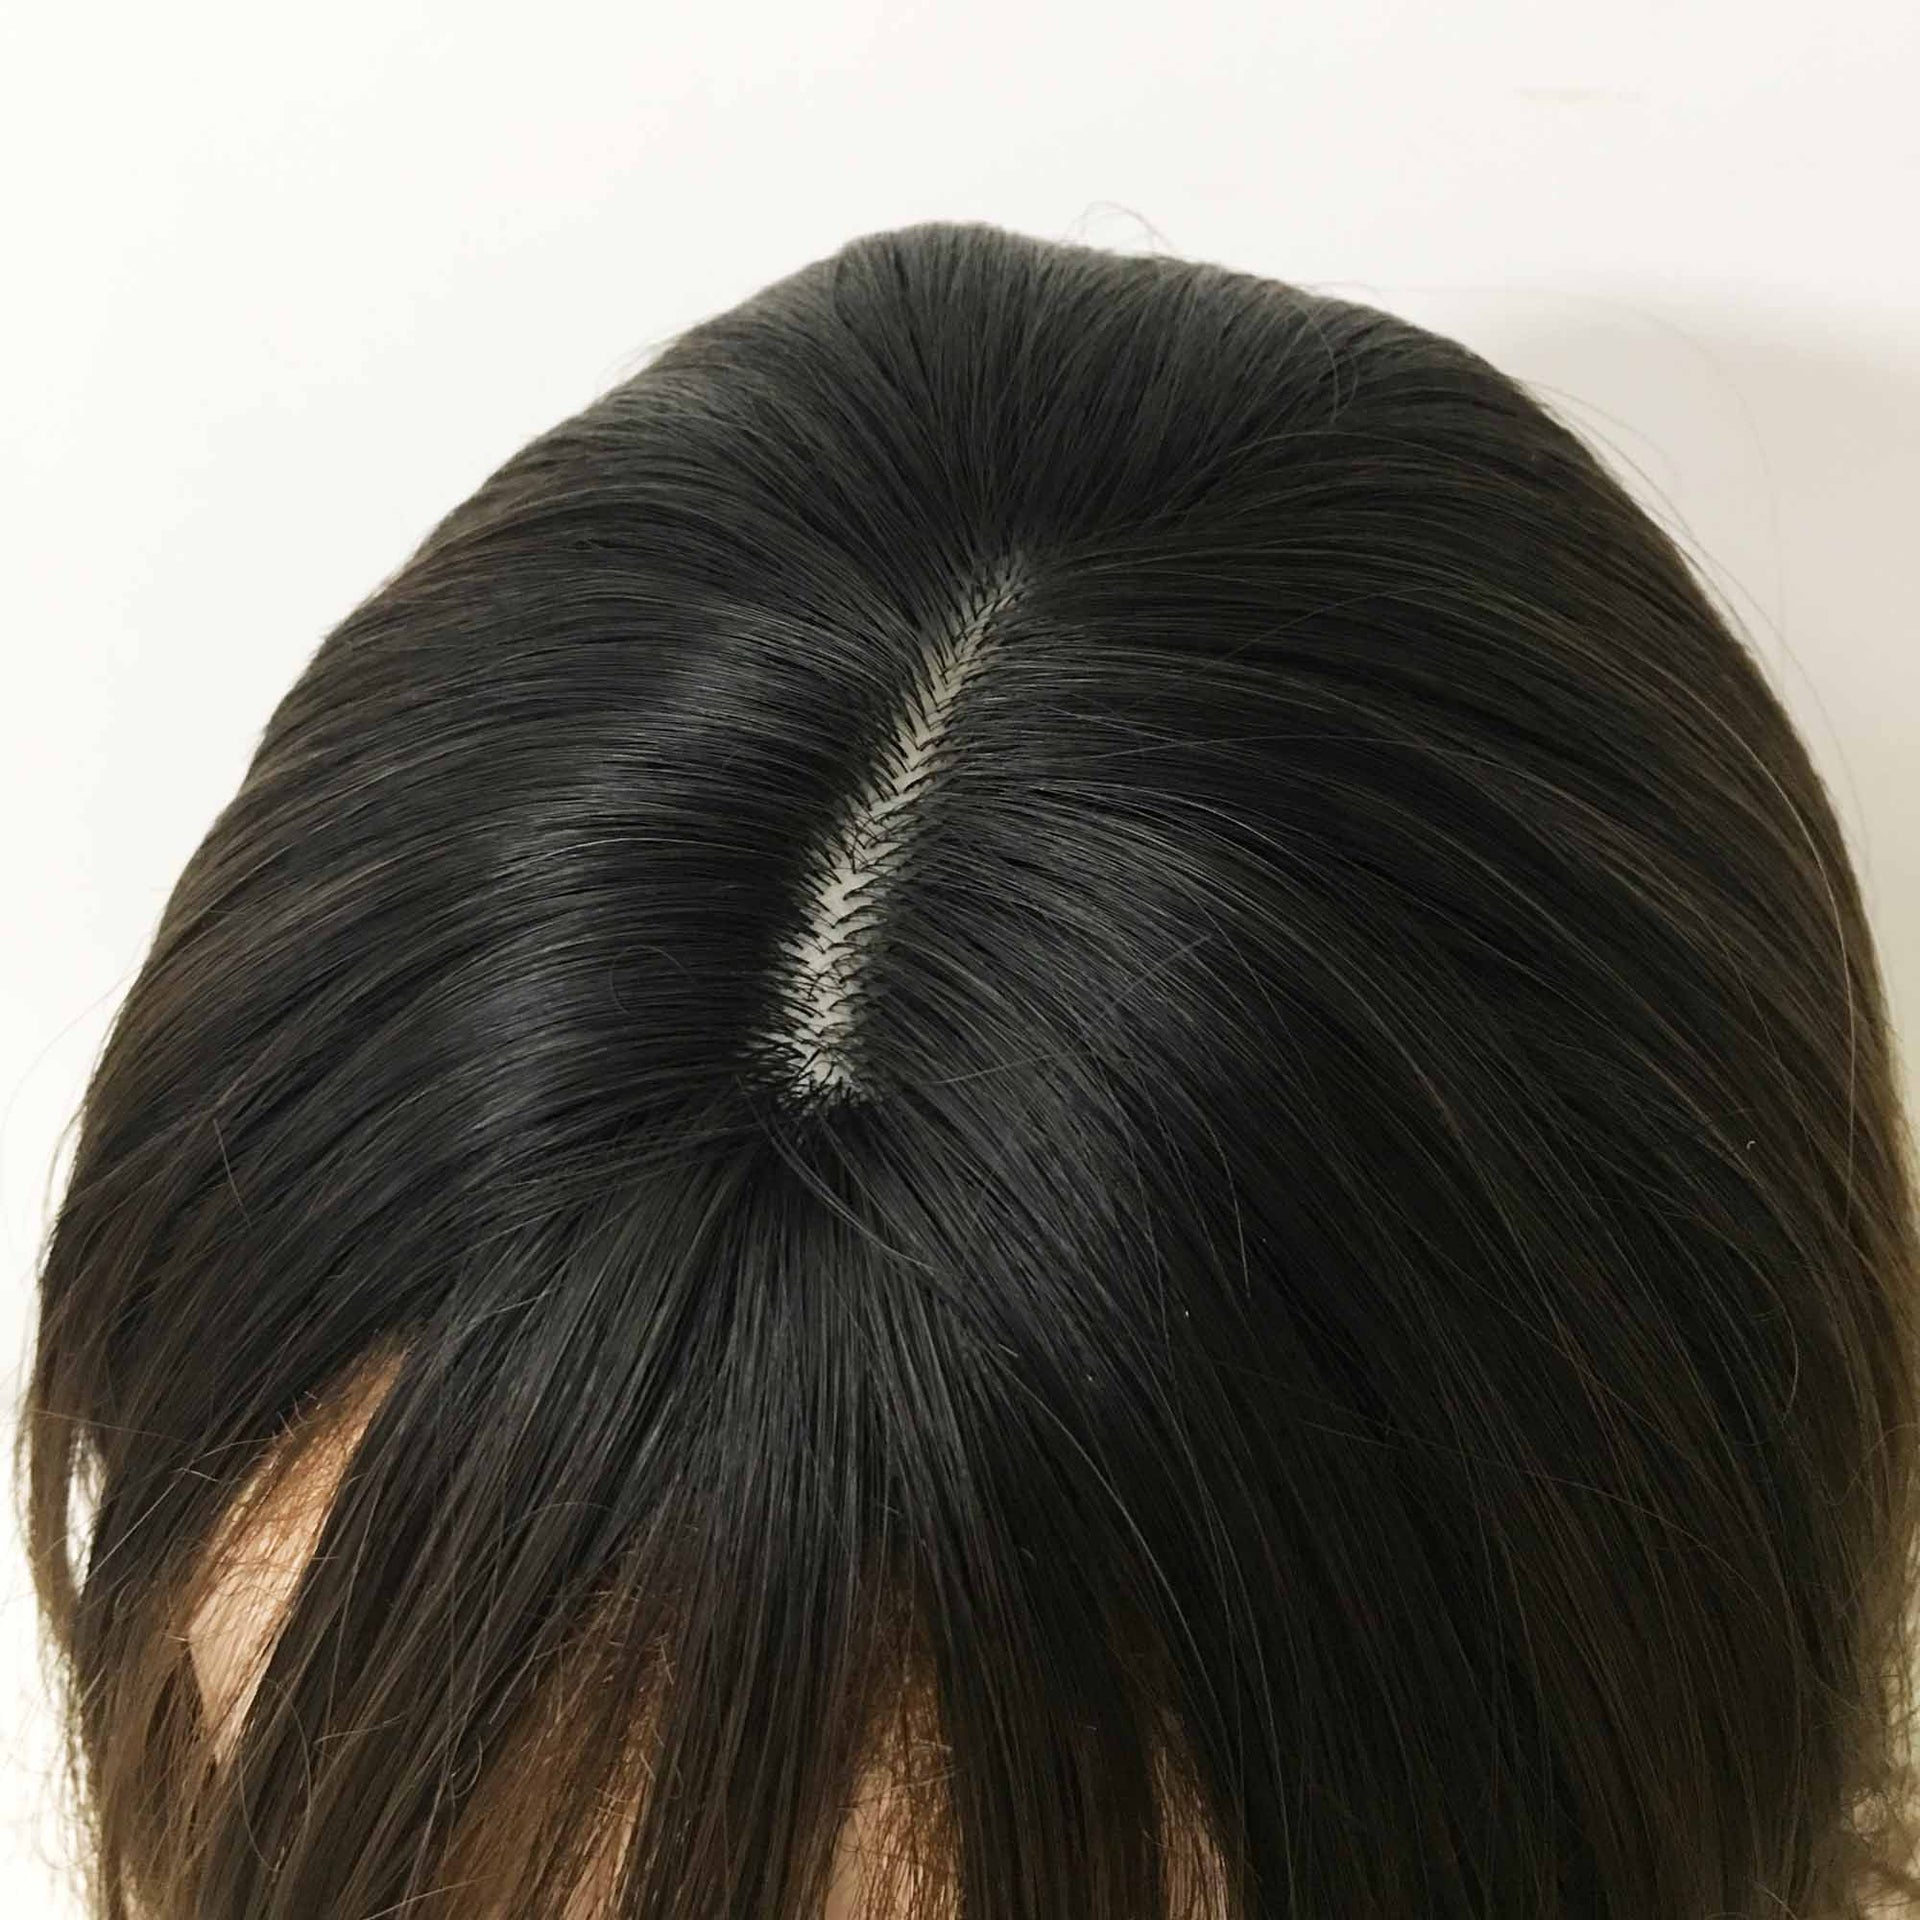 nevermindyrhead Women Brown Dark Root Long Curly Fringe Bangs Wig